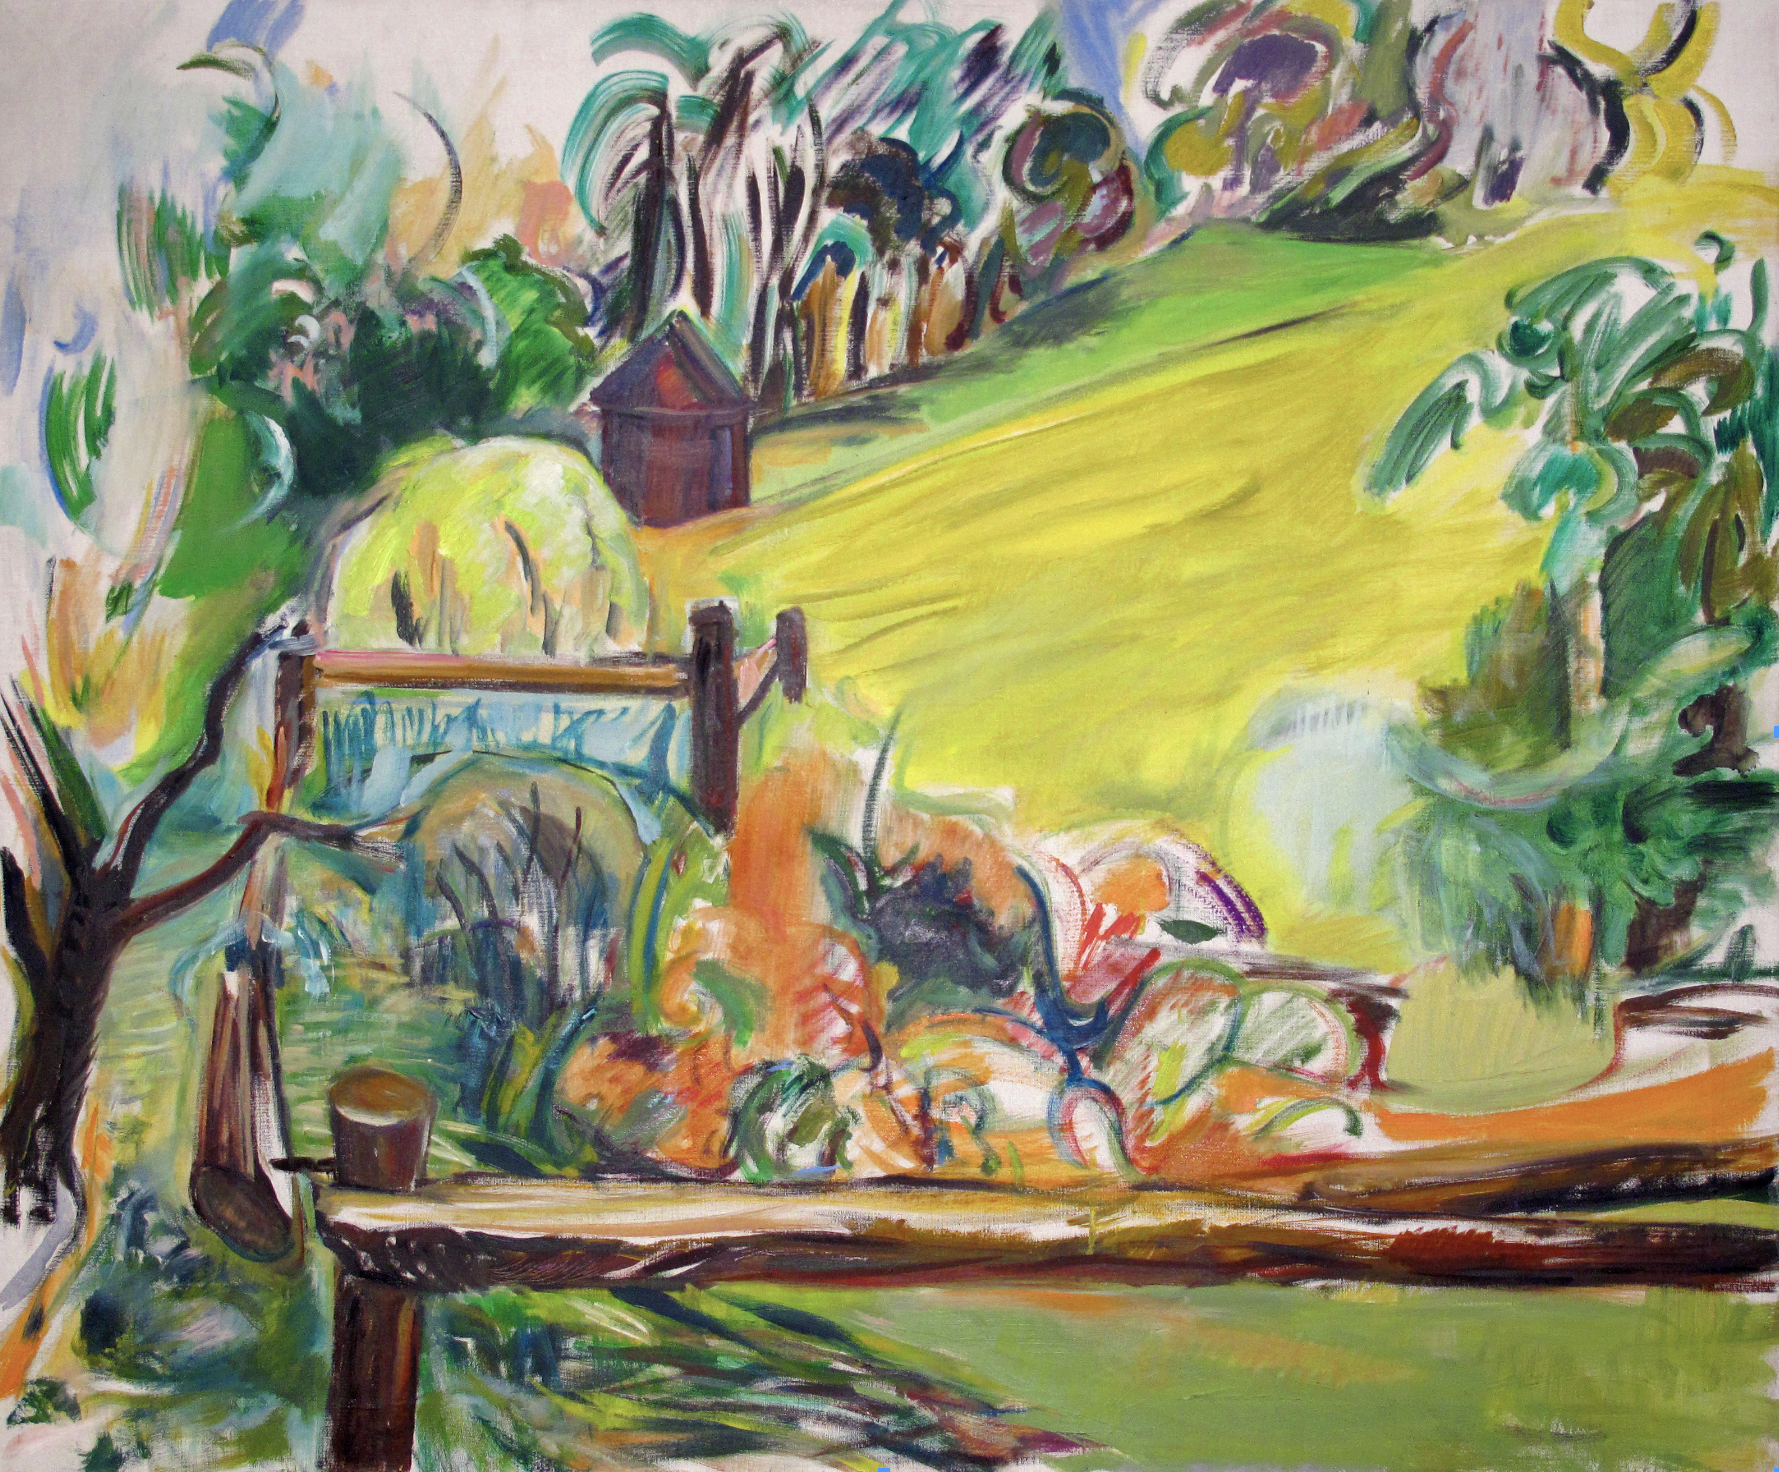 MRS. CUMMINGS’ GARDEN, skowhegan, MAINE,  oil on canvas, 30” X 36,” 1958.png